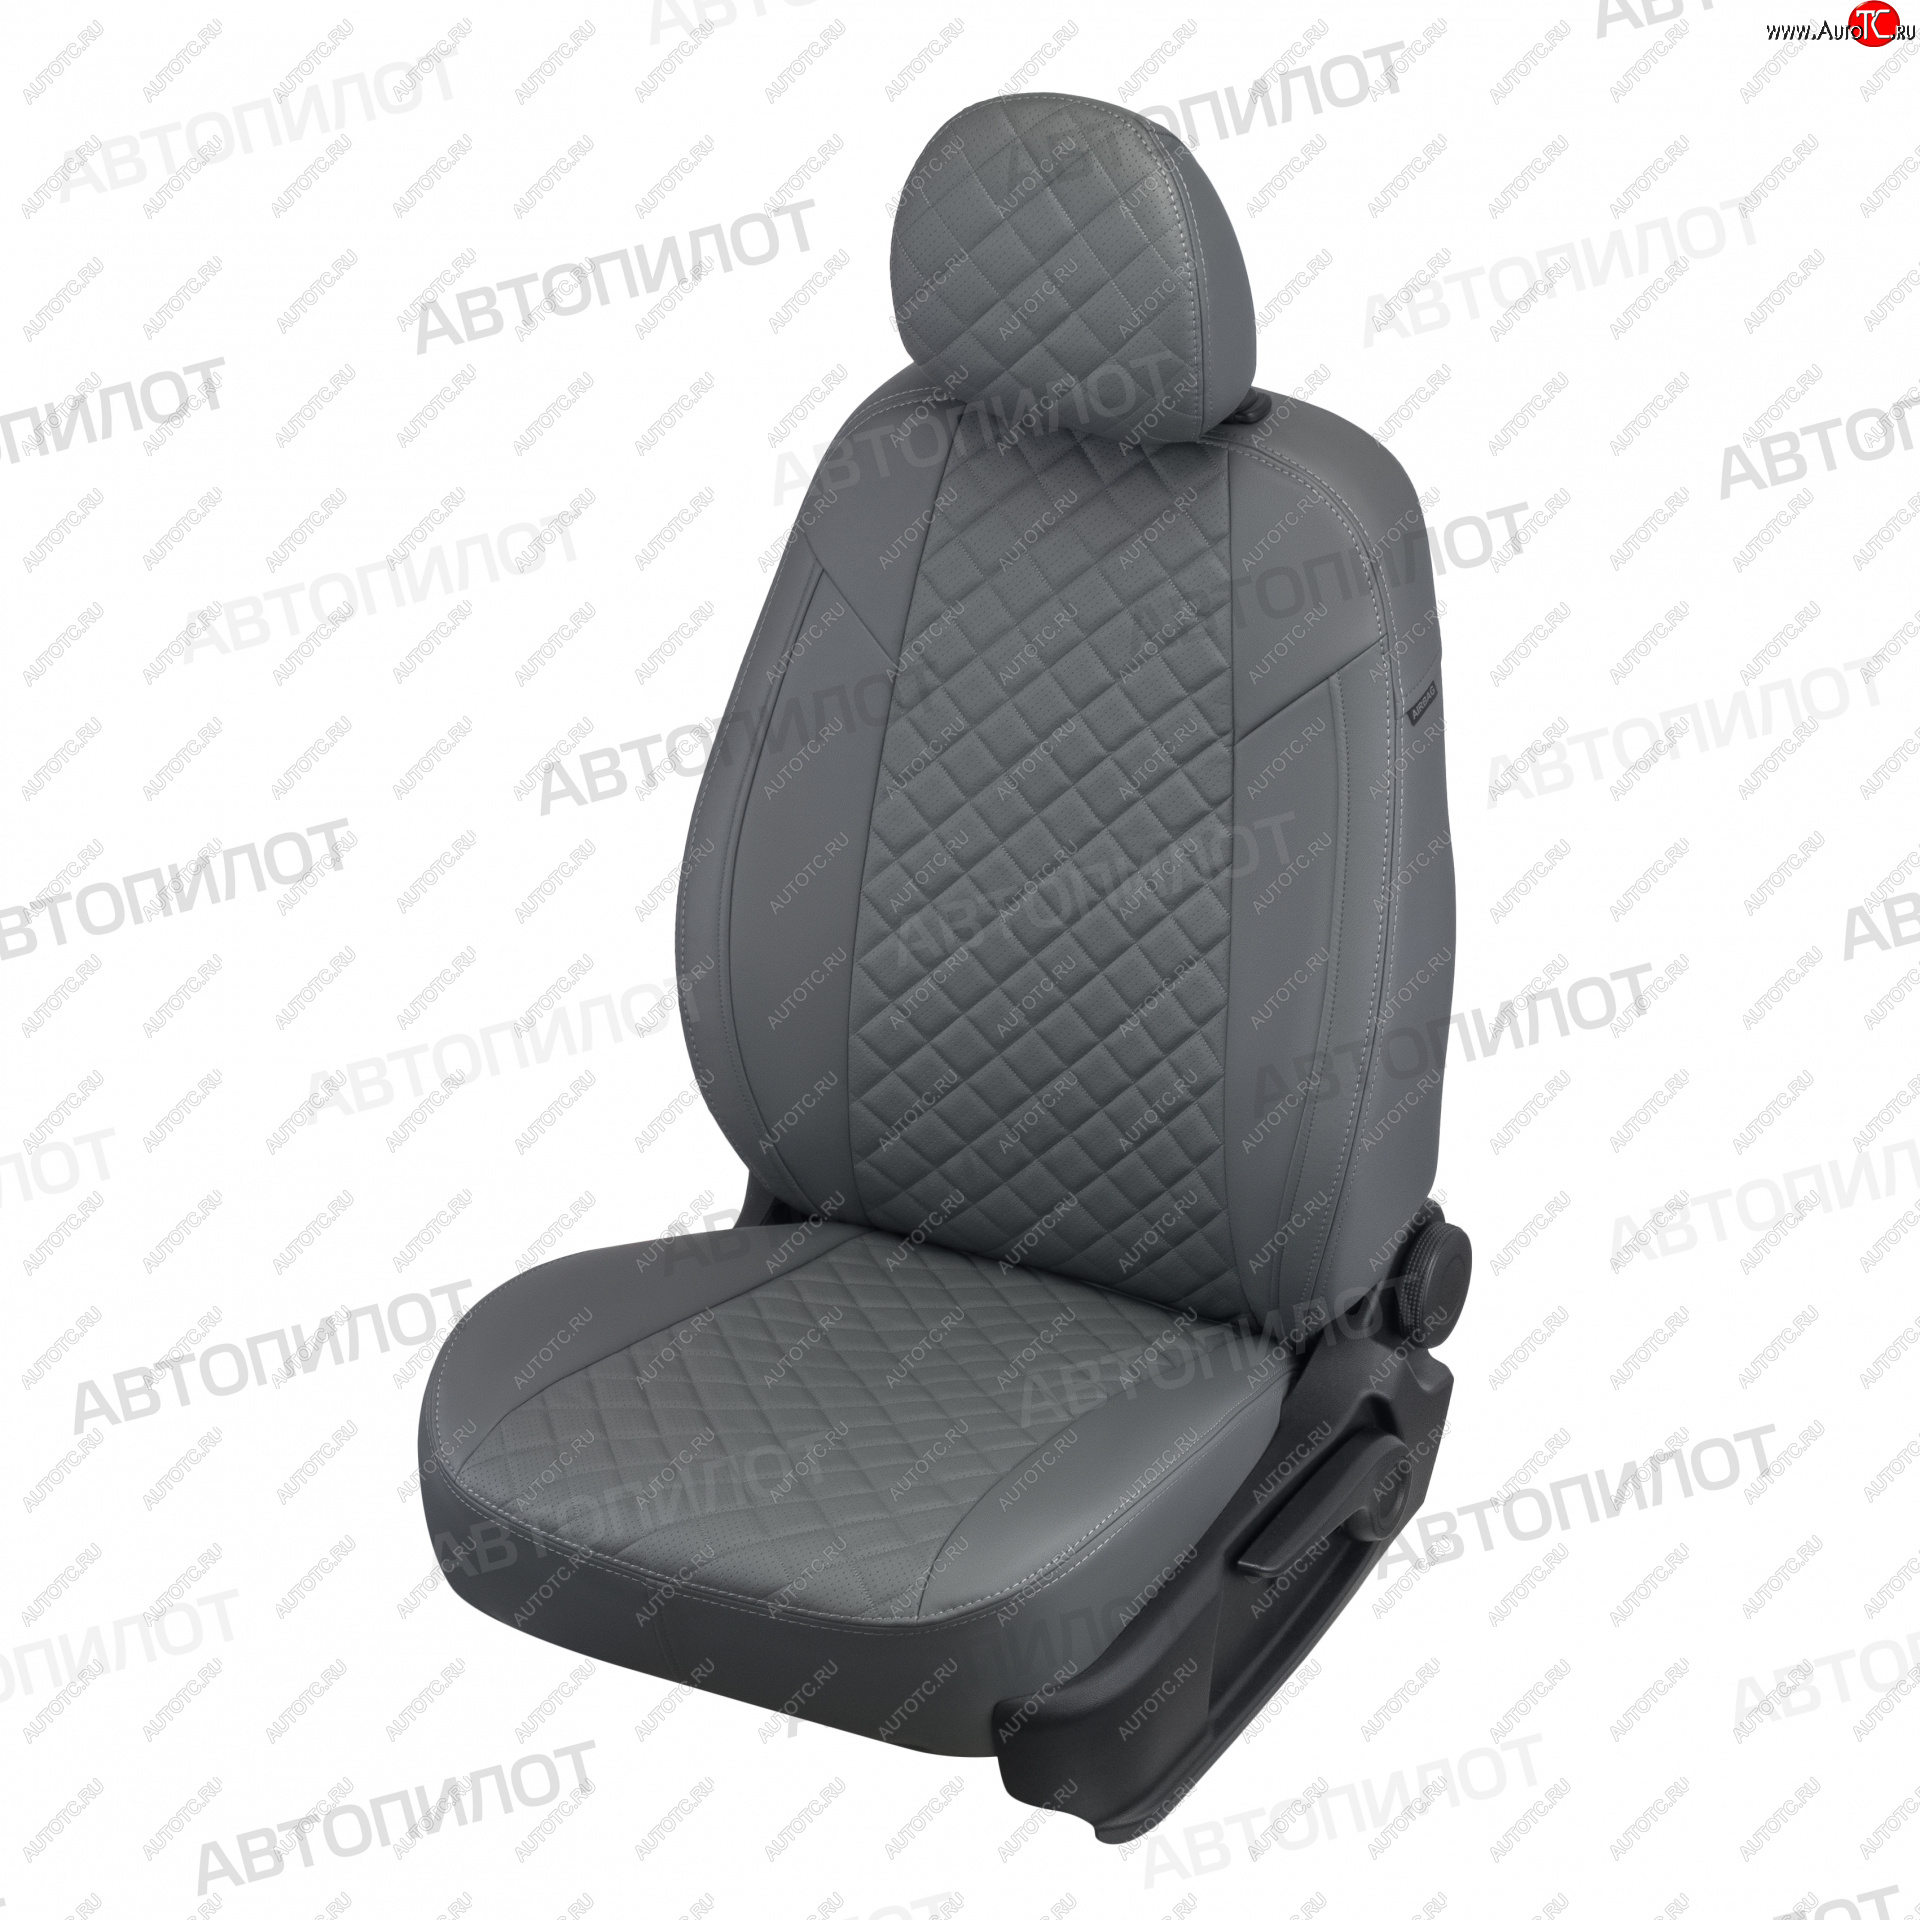 7 599 р. Чехлы сидений (экокожа) Автопилот Ромб  KIA Soul  2 PS (2014-2019) (серый)